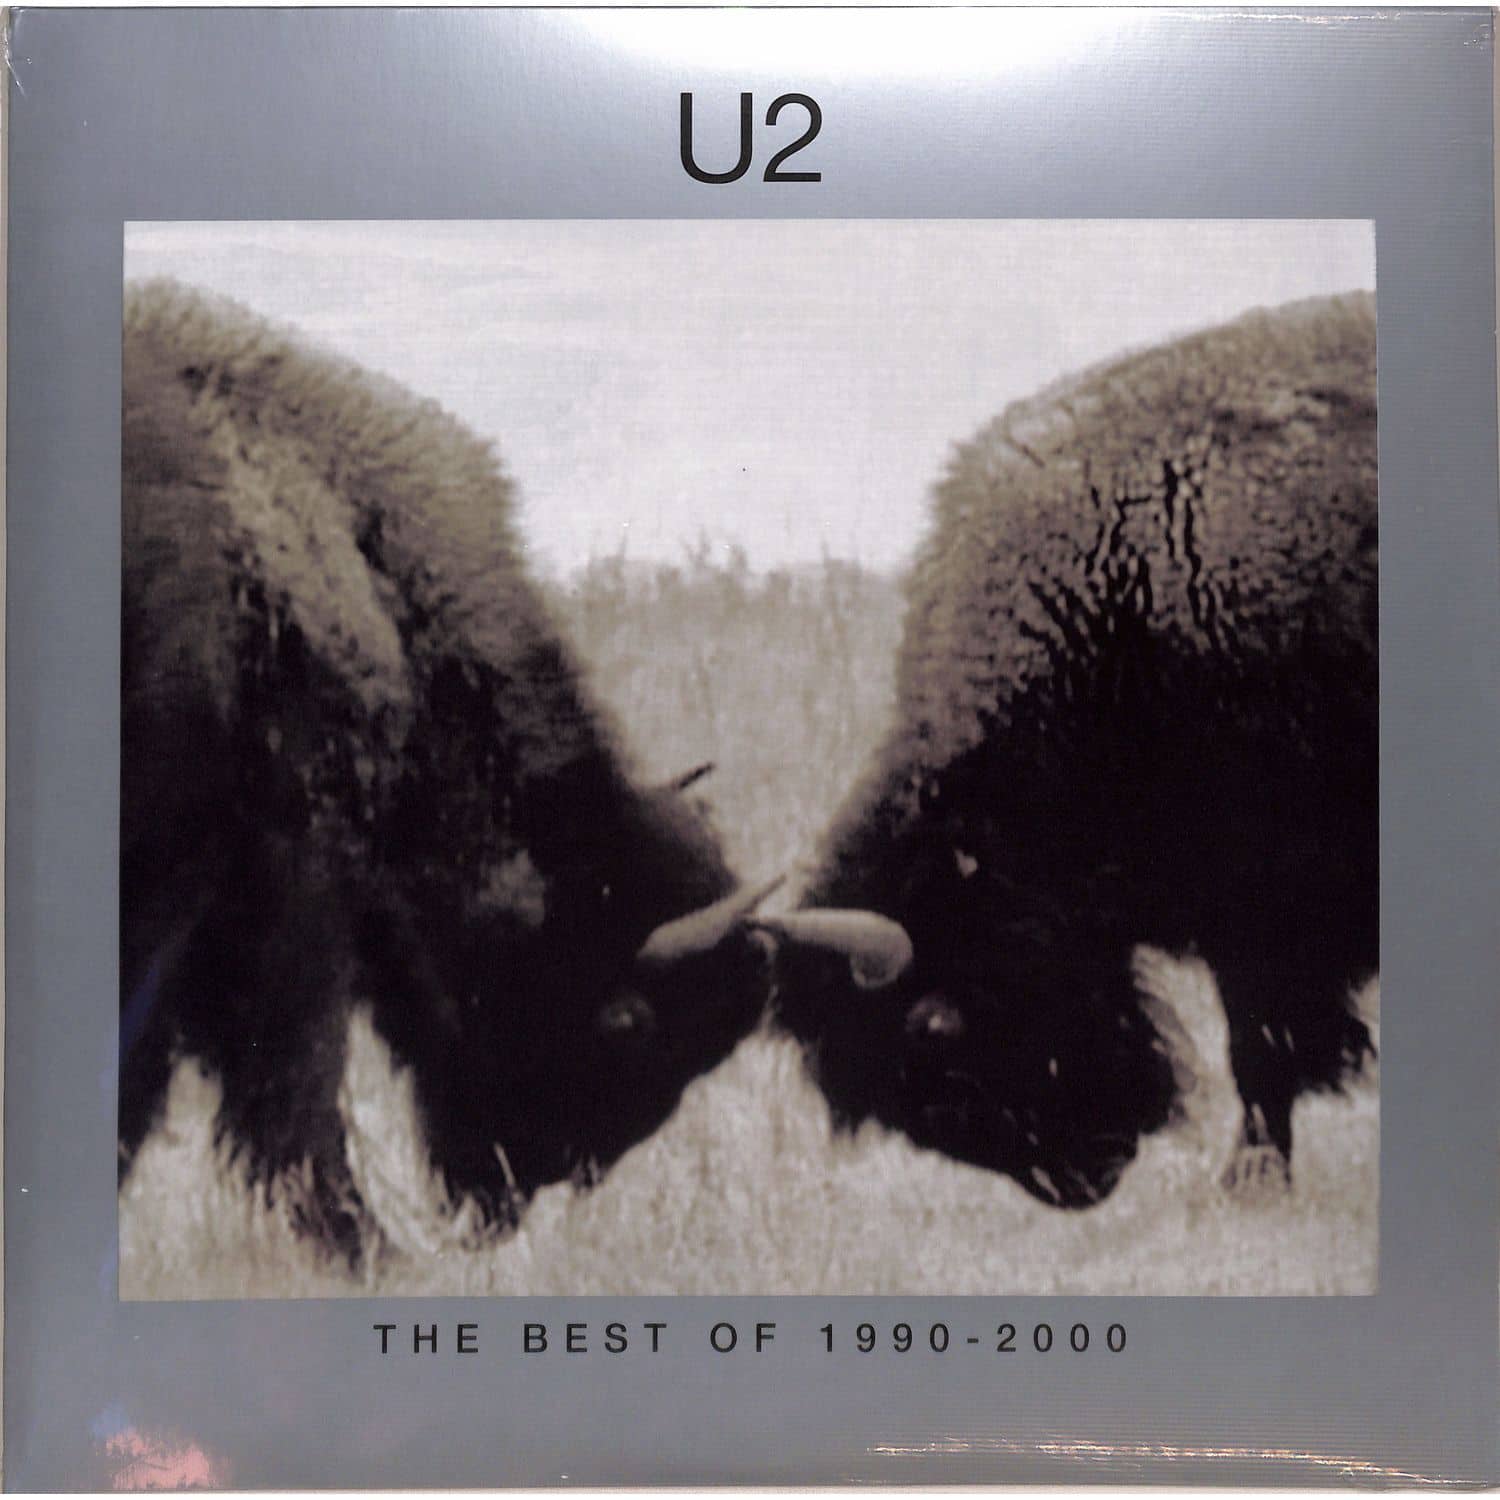 U2 - THE BEST OF 1990 - 2000 